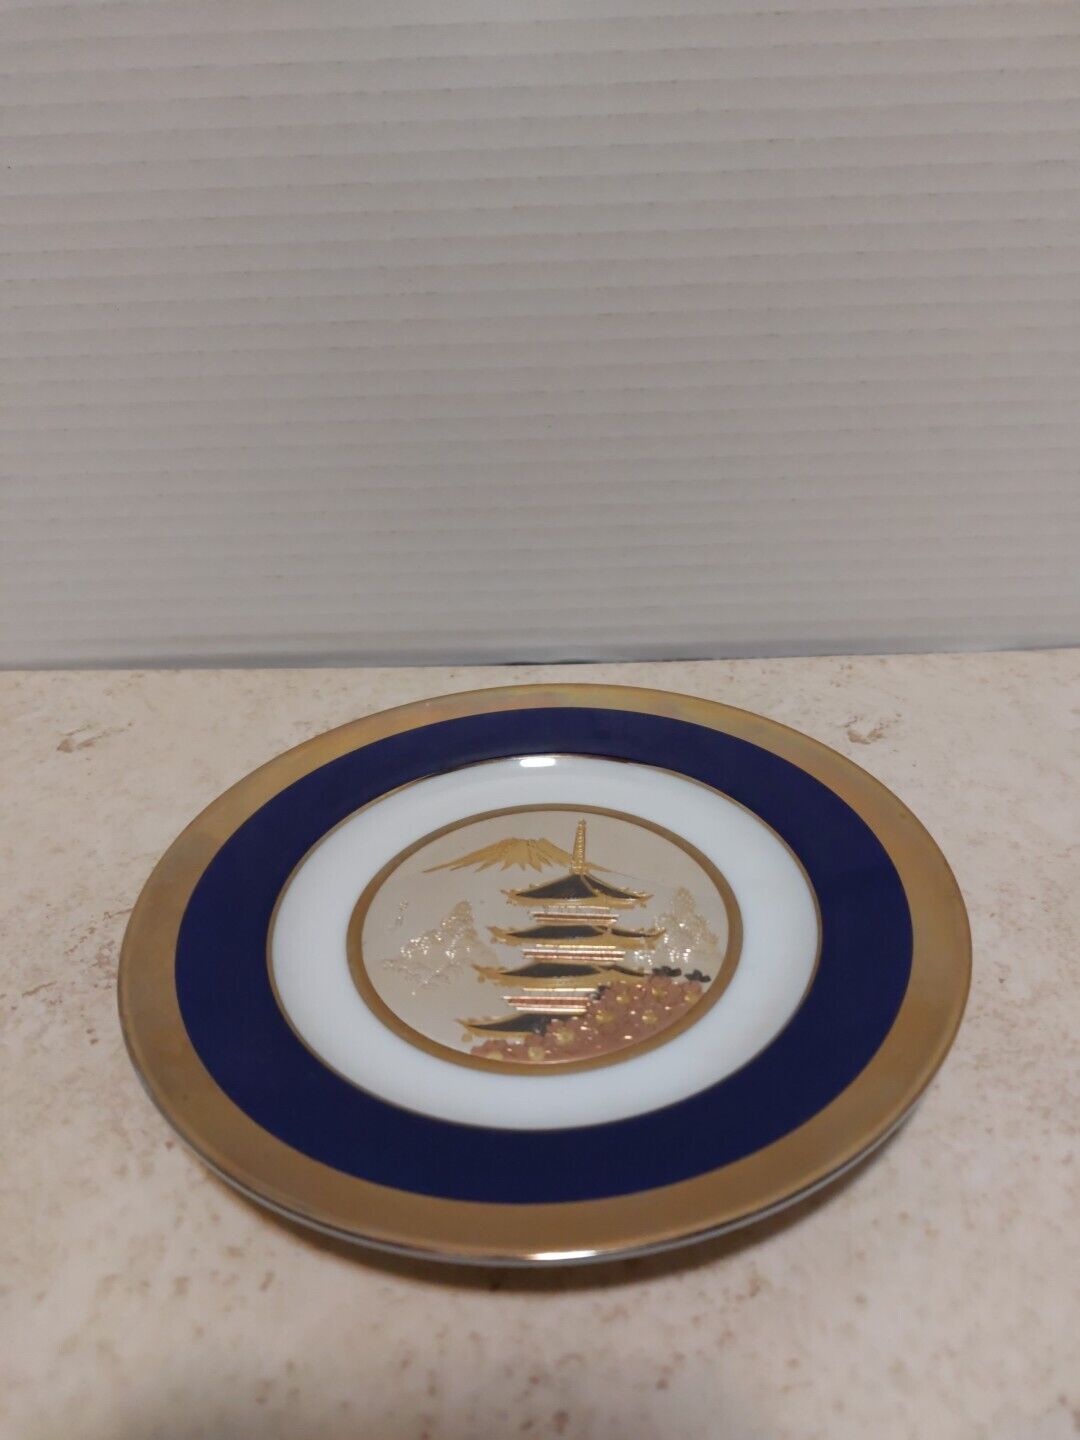 VTG Sun Flower Chokin Plate 24K Gold Edged Plate Trinket Dish Made in Japan